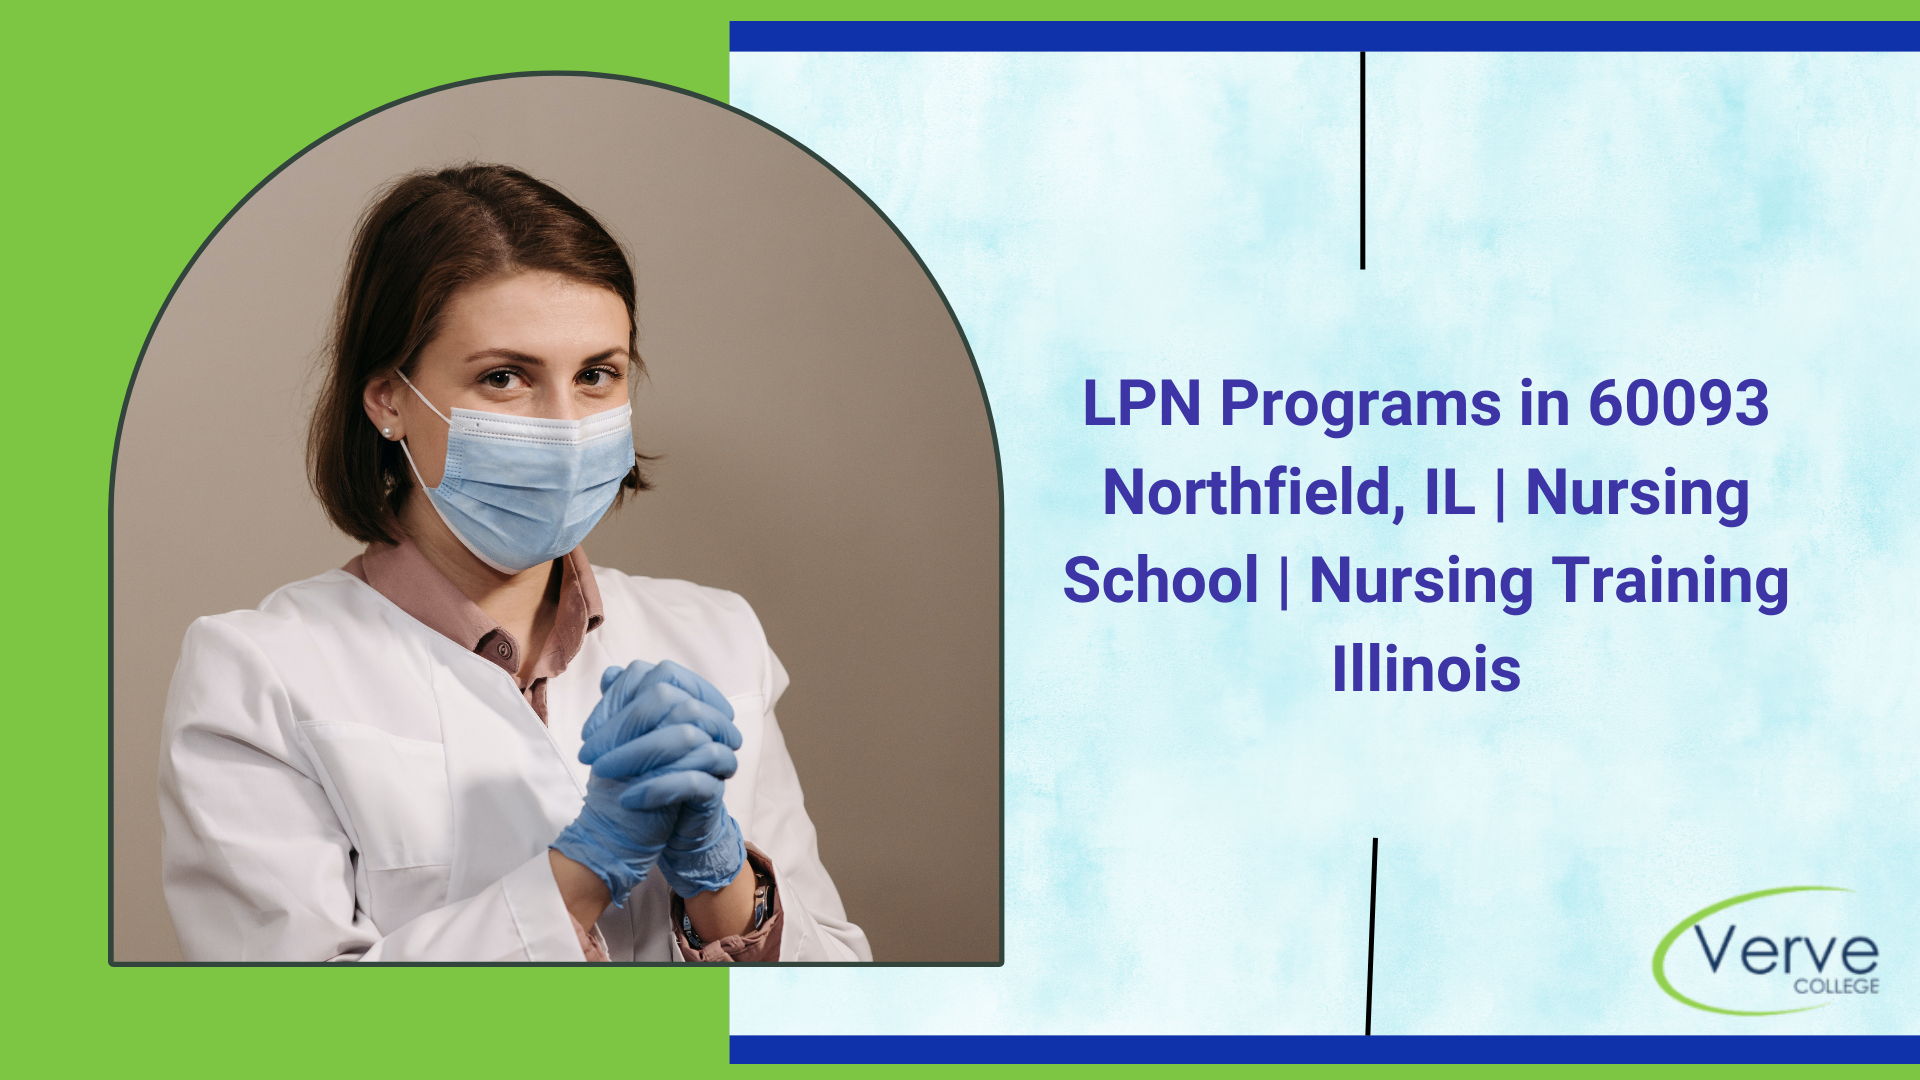 LPN Programs in 60093 Northfield, IL | Nursing School | Nursing Training Illinois